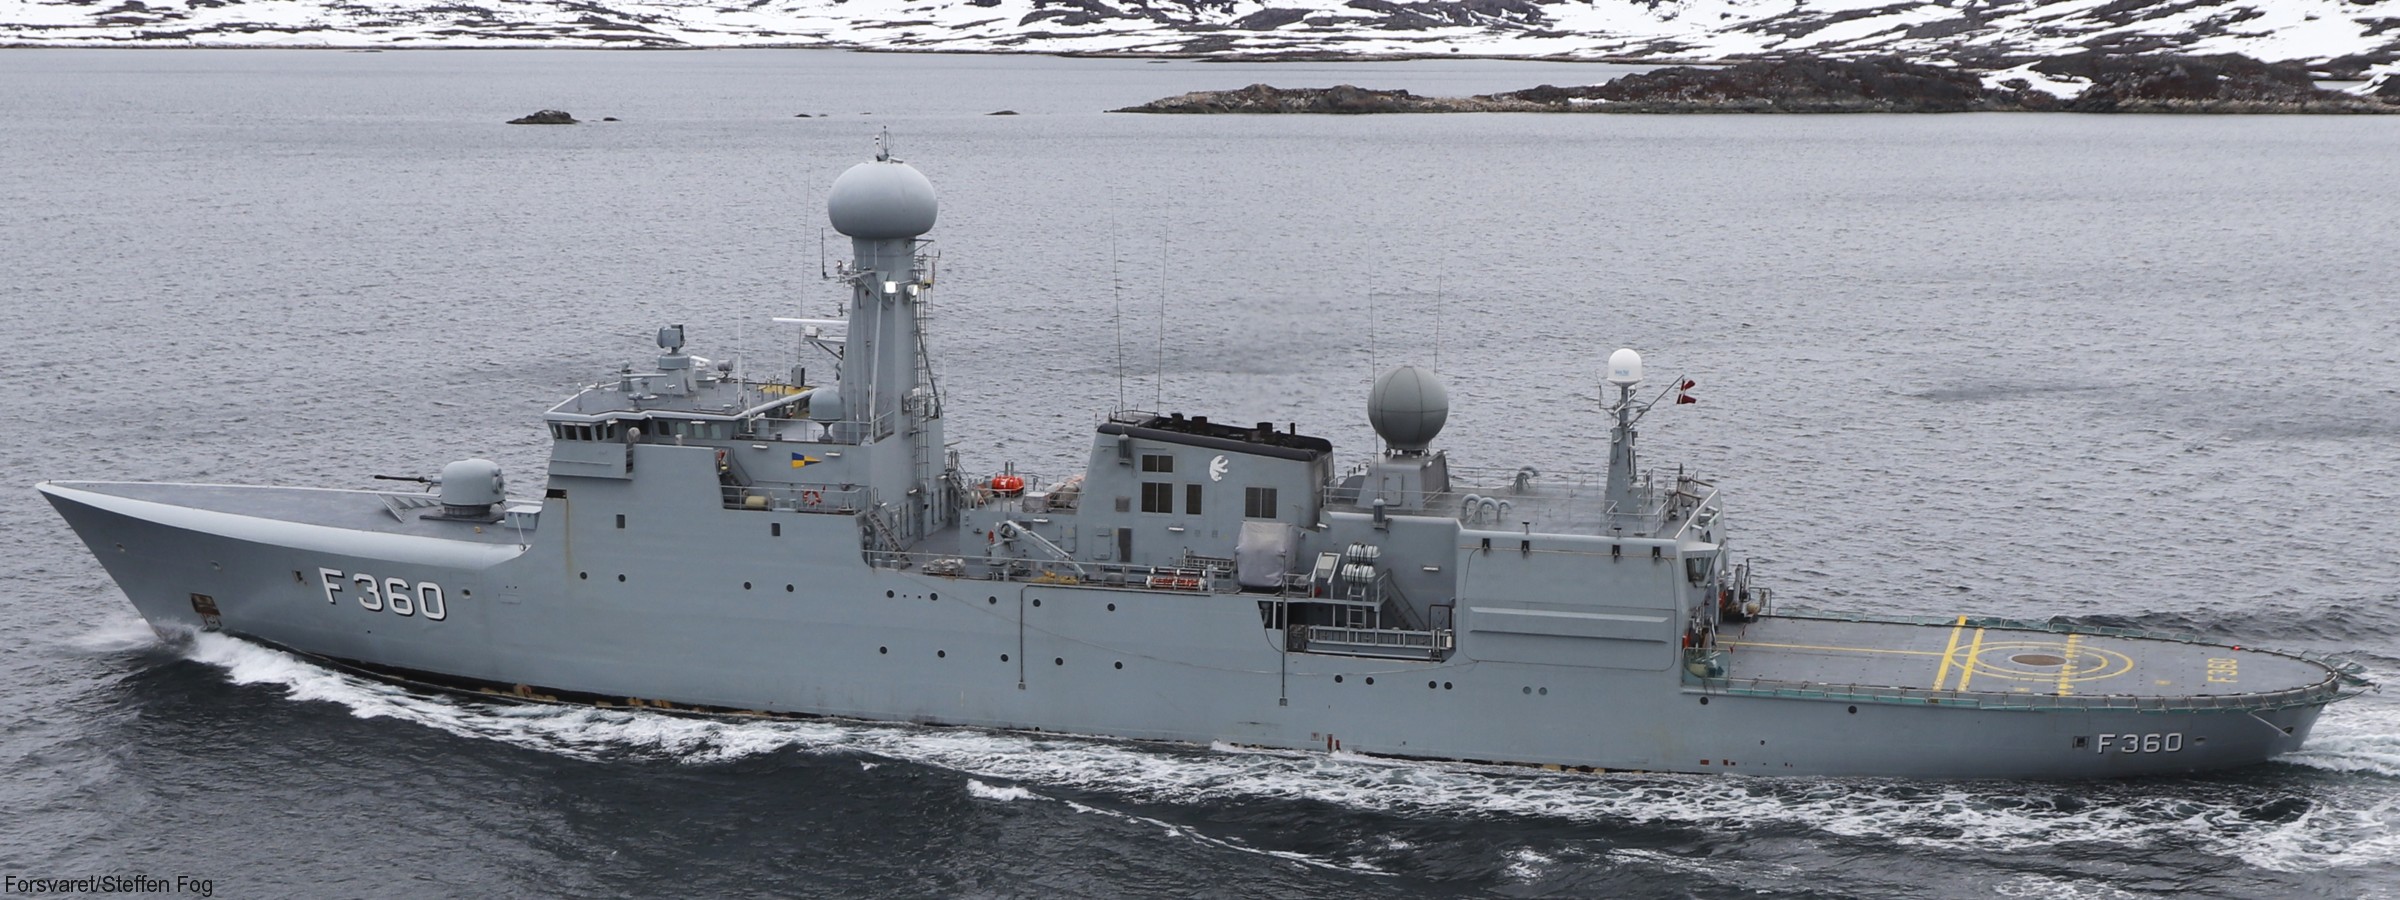 f-360 hdms hvidbjornen thetis class ocean patrol frigate royal danish navy kongelige danske marine kdm inspektionsskibet 05